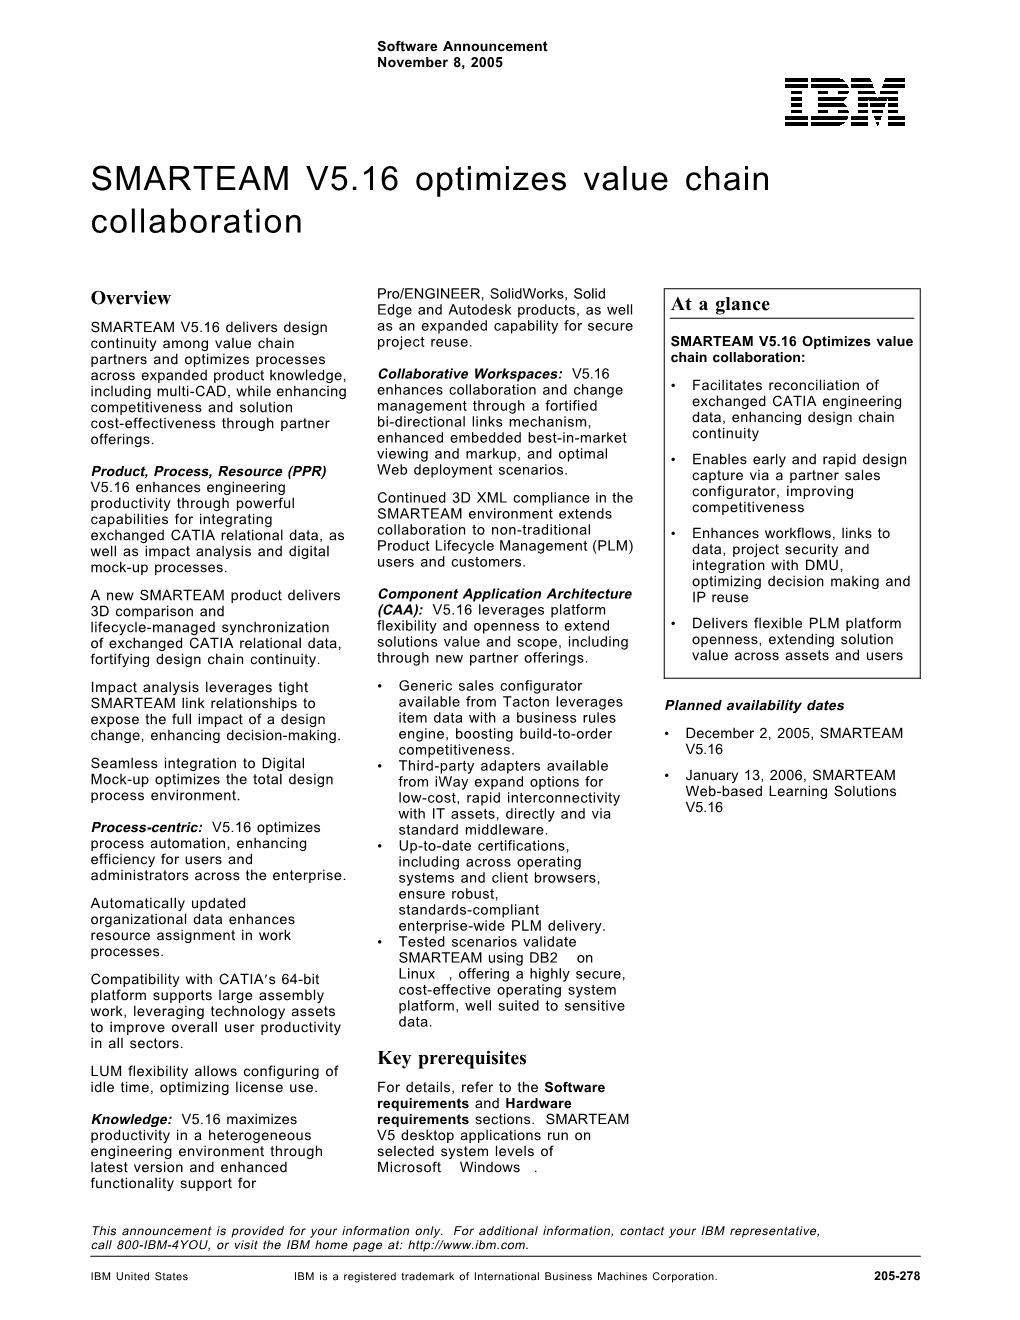 SMARTEAM V5.16 Optimizes Value Chain Collaboration